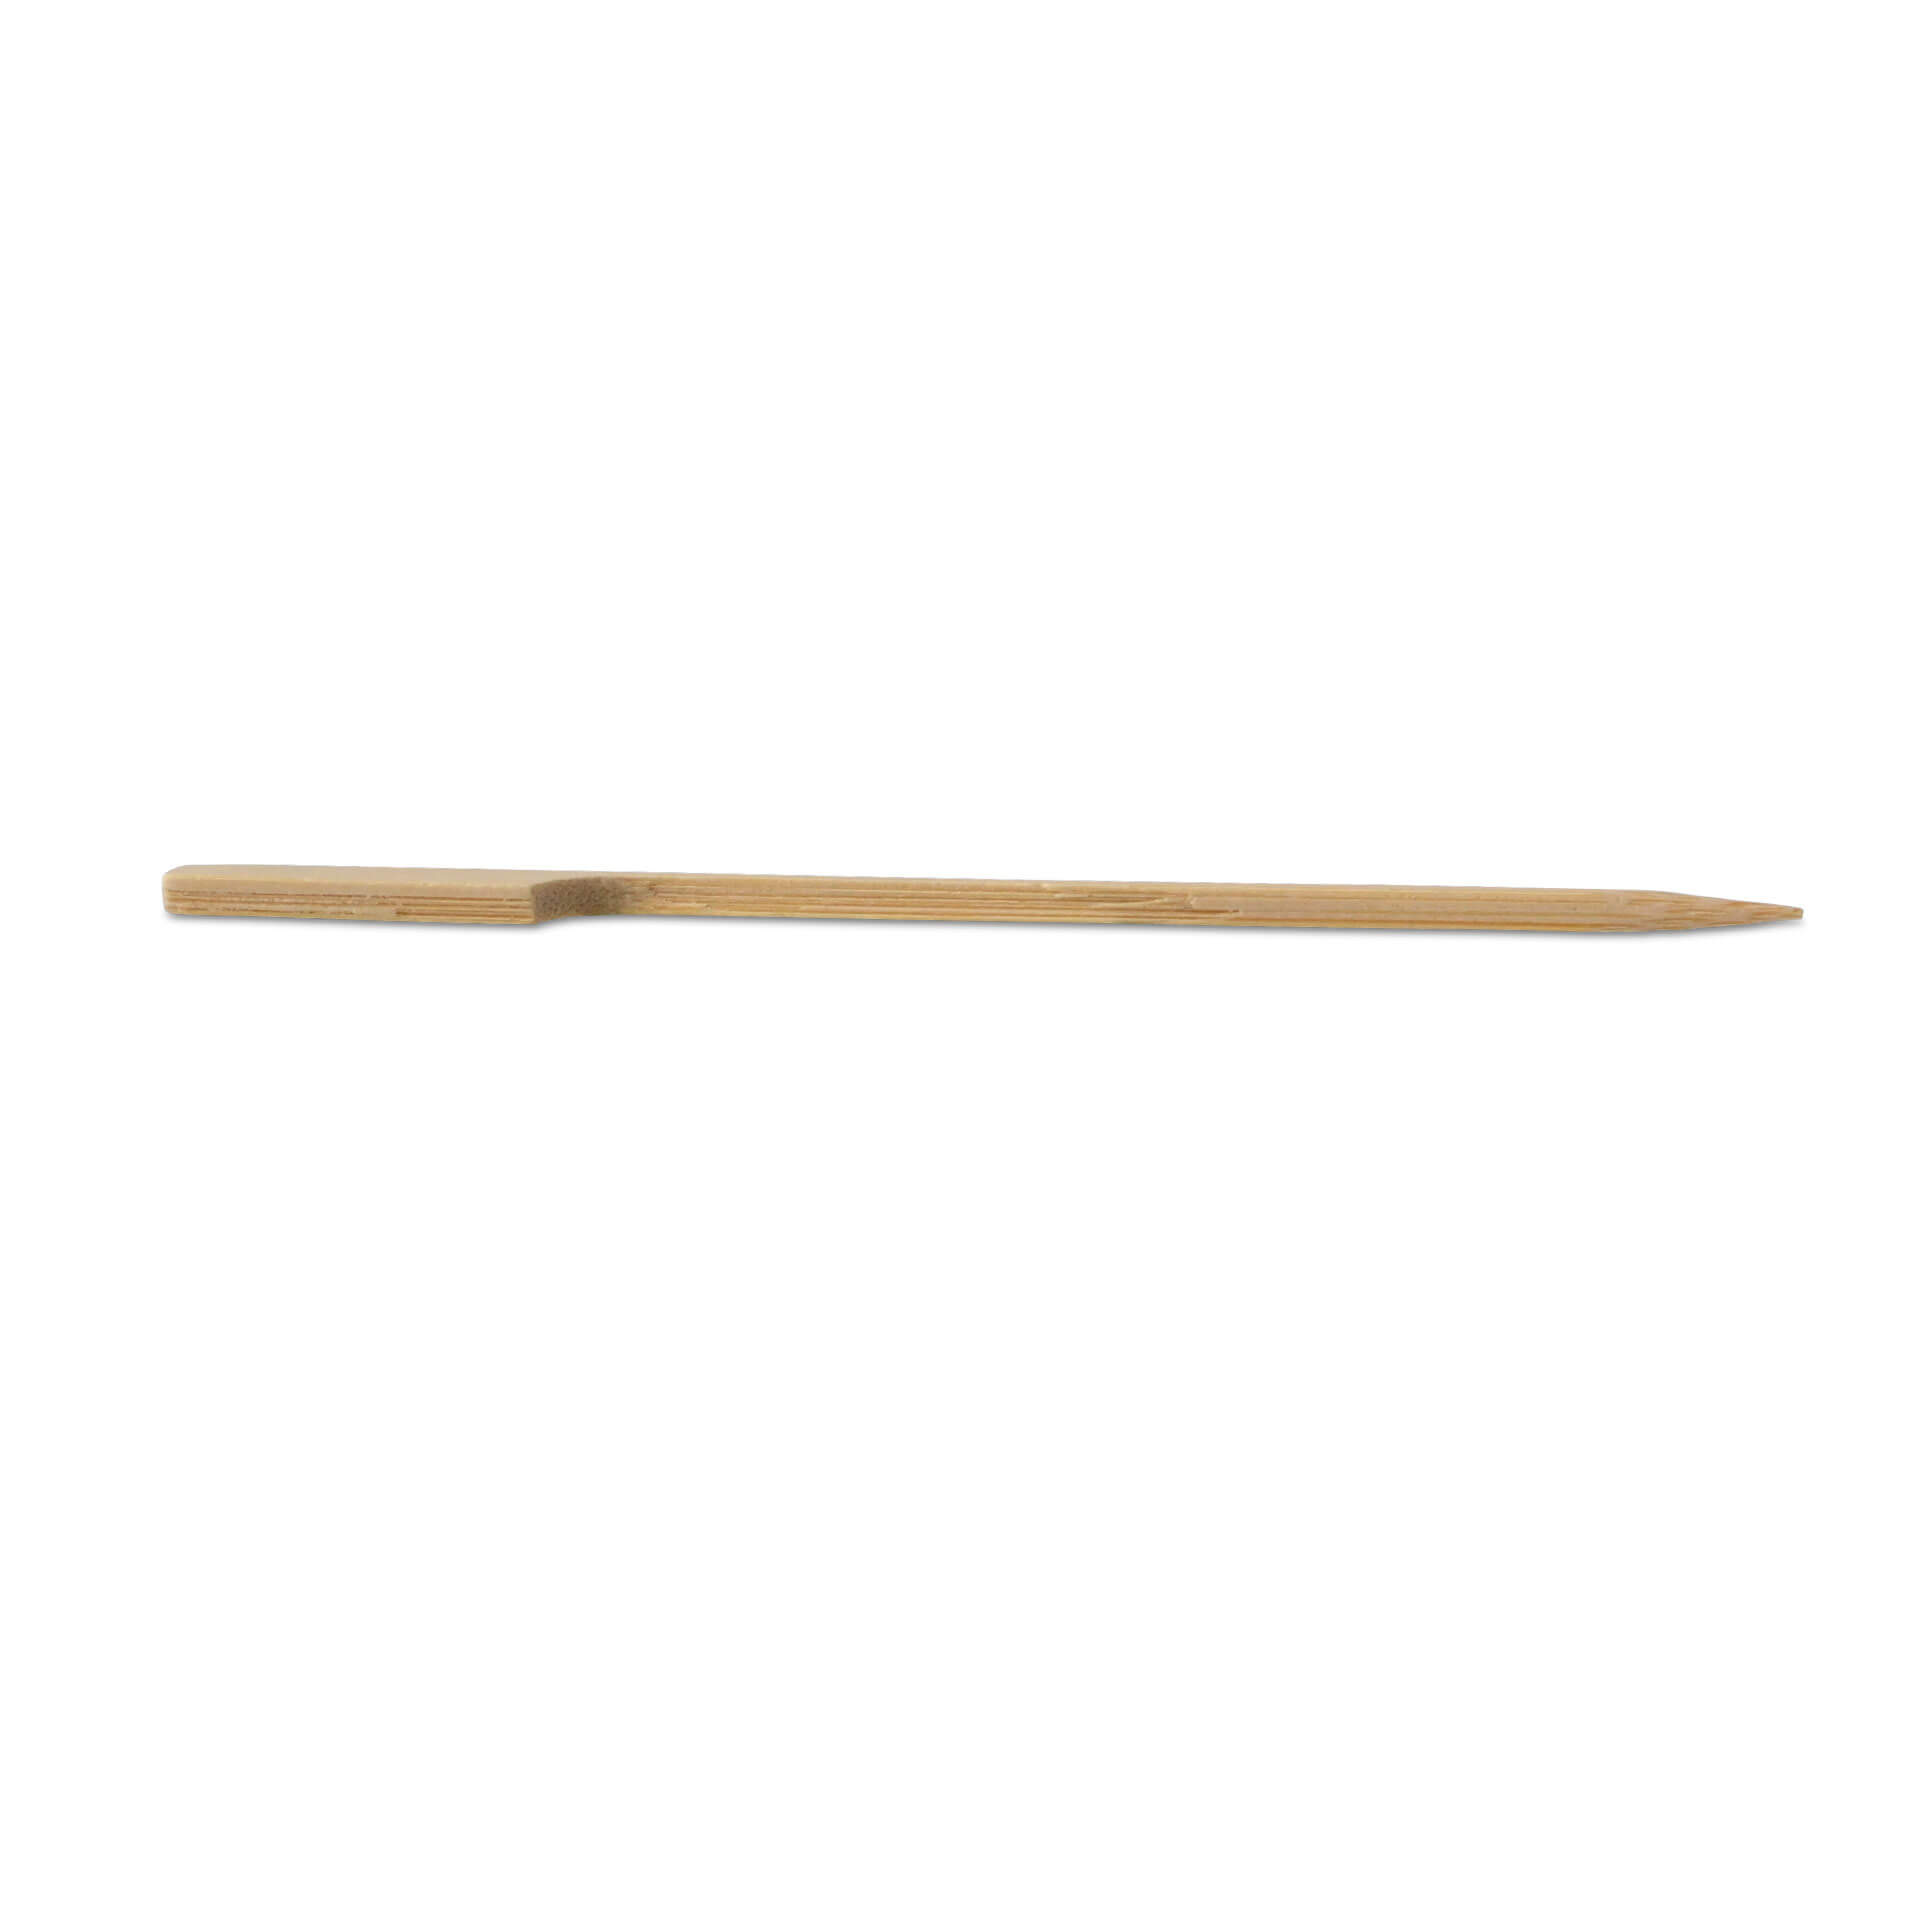 Bambus-Flaggen-Spieße 12 cm, unbehandelt